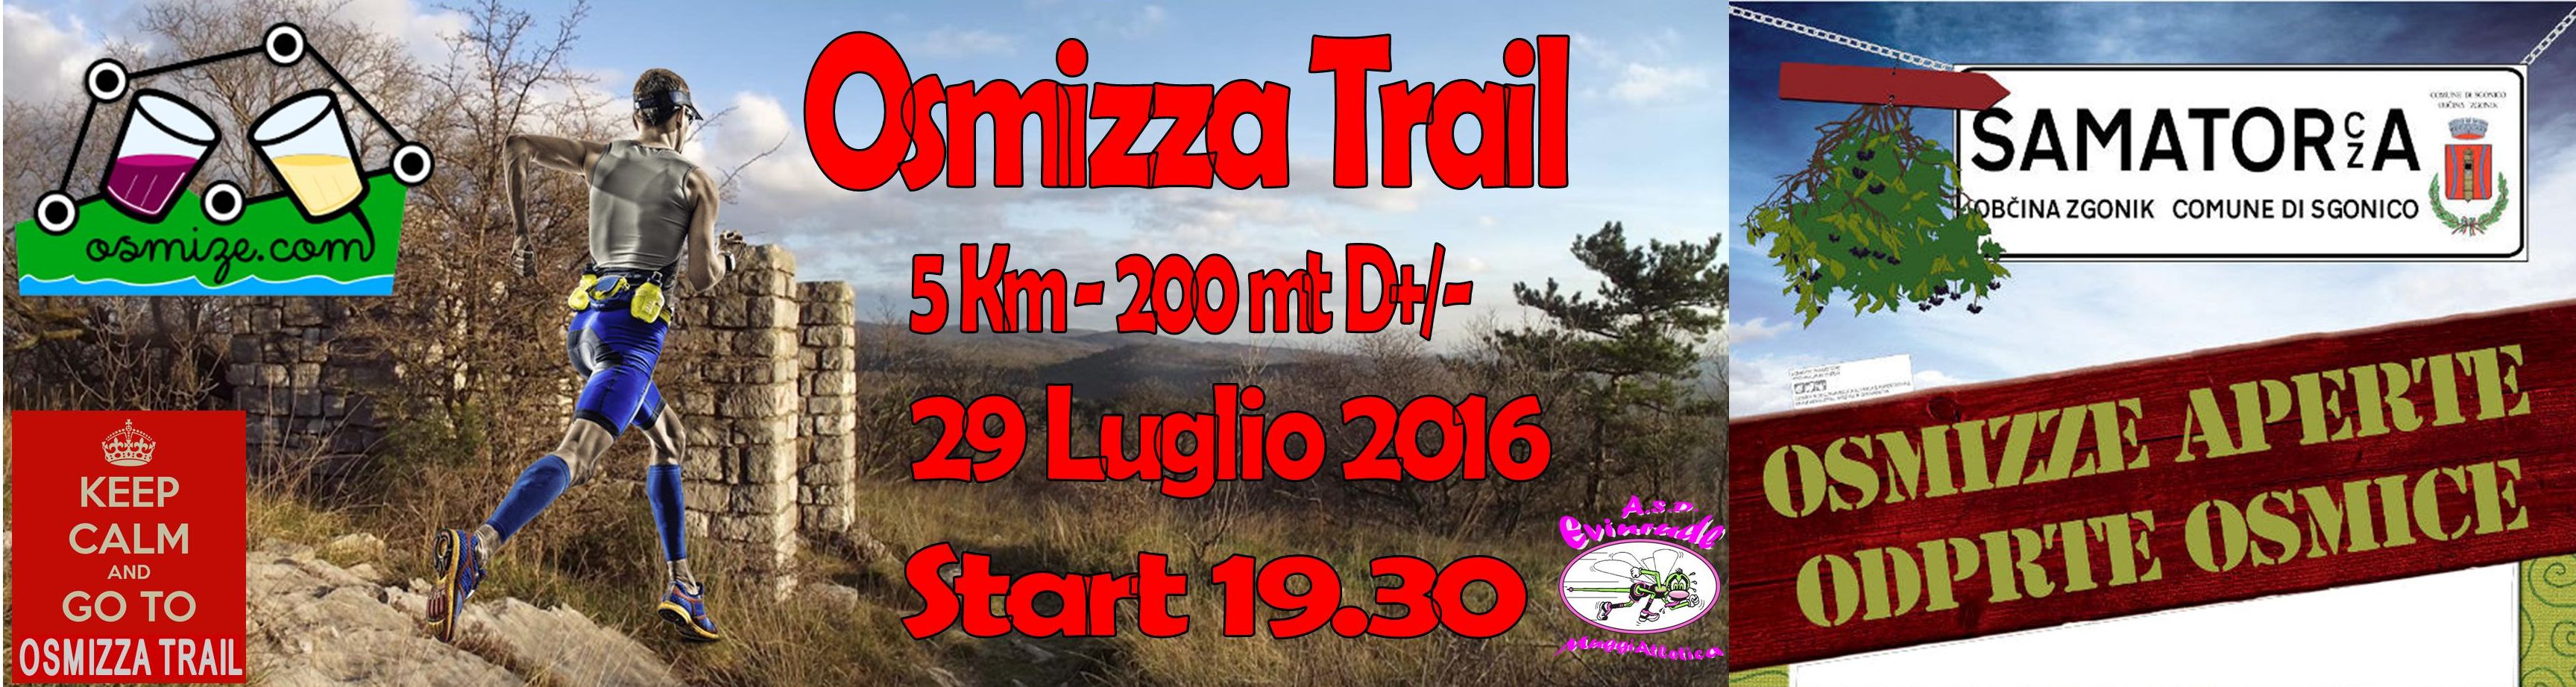 Volantino Osmiza Trail 2016 mod 2